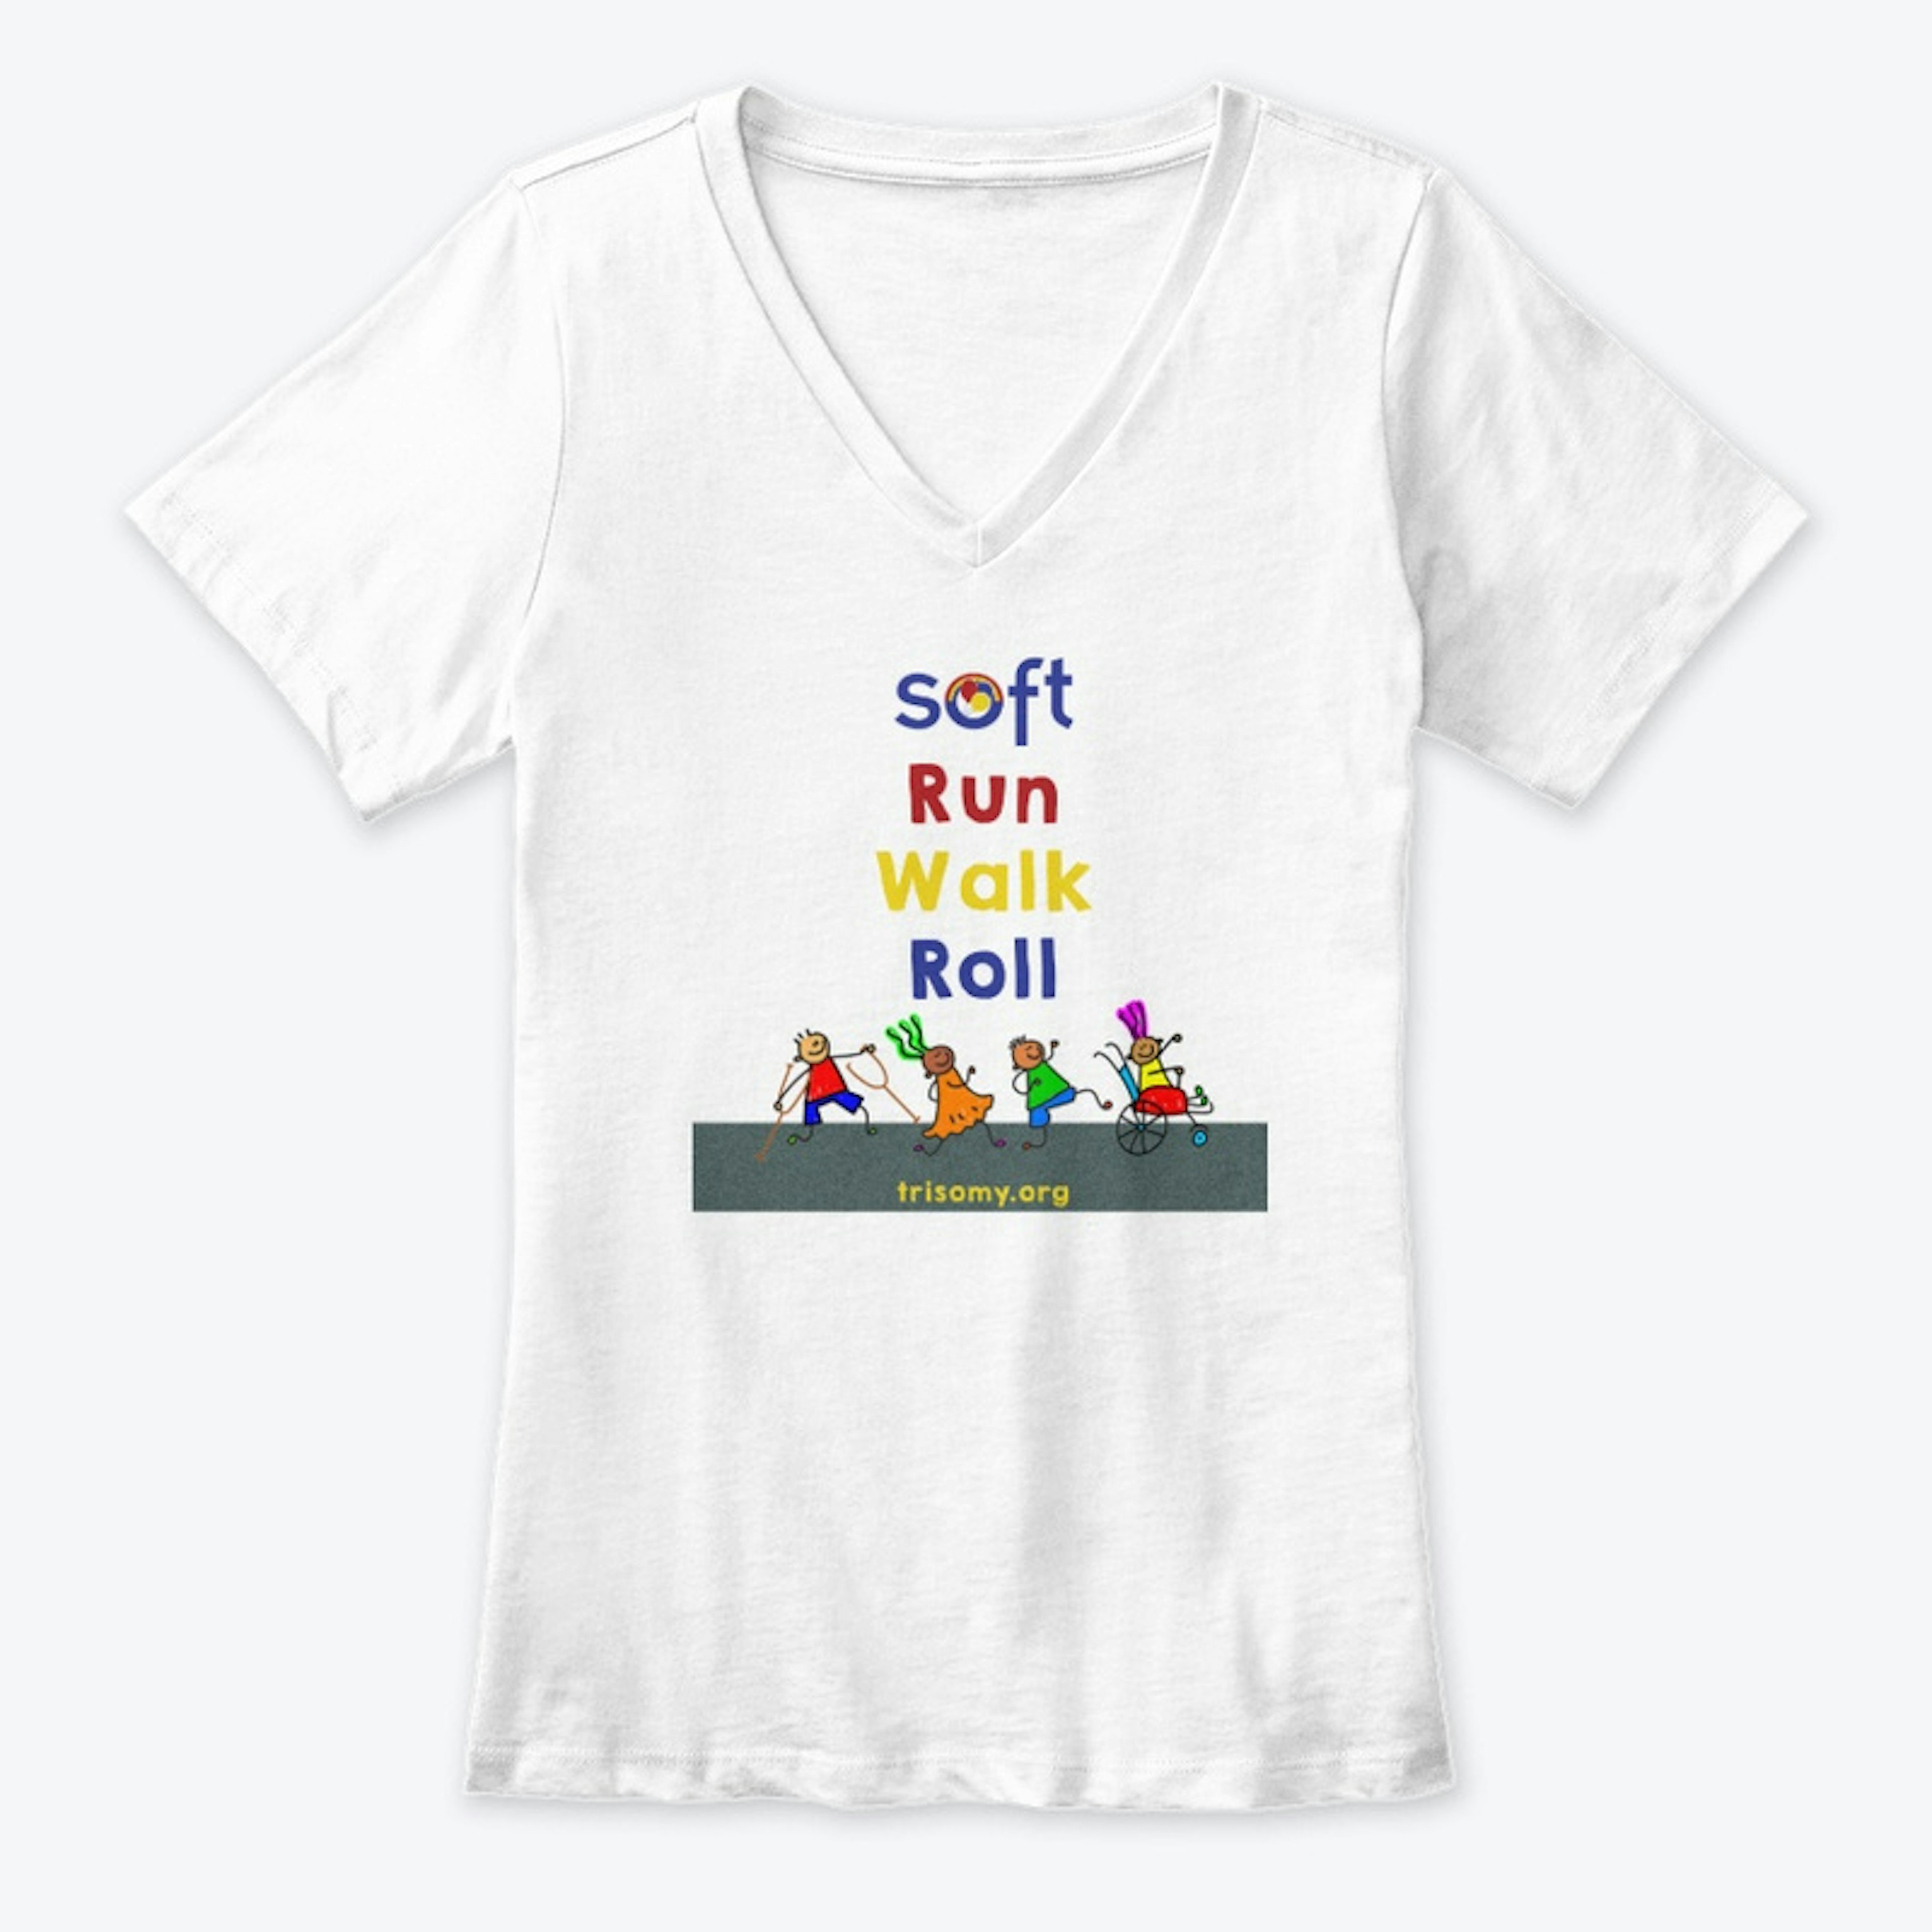 2021 SOFT Run Walk Roll shirt